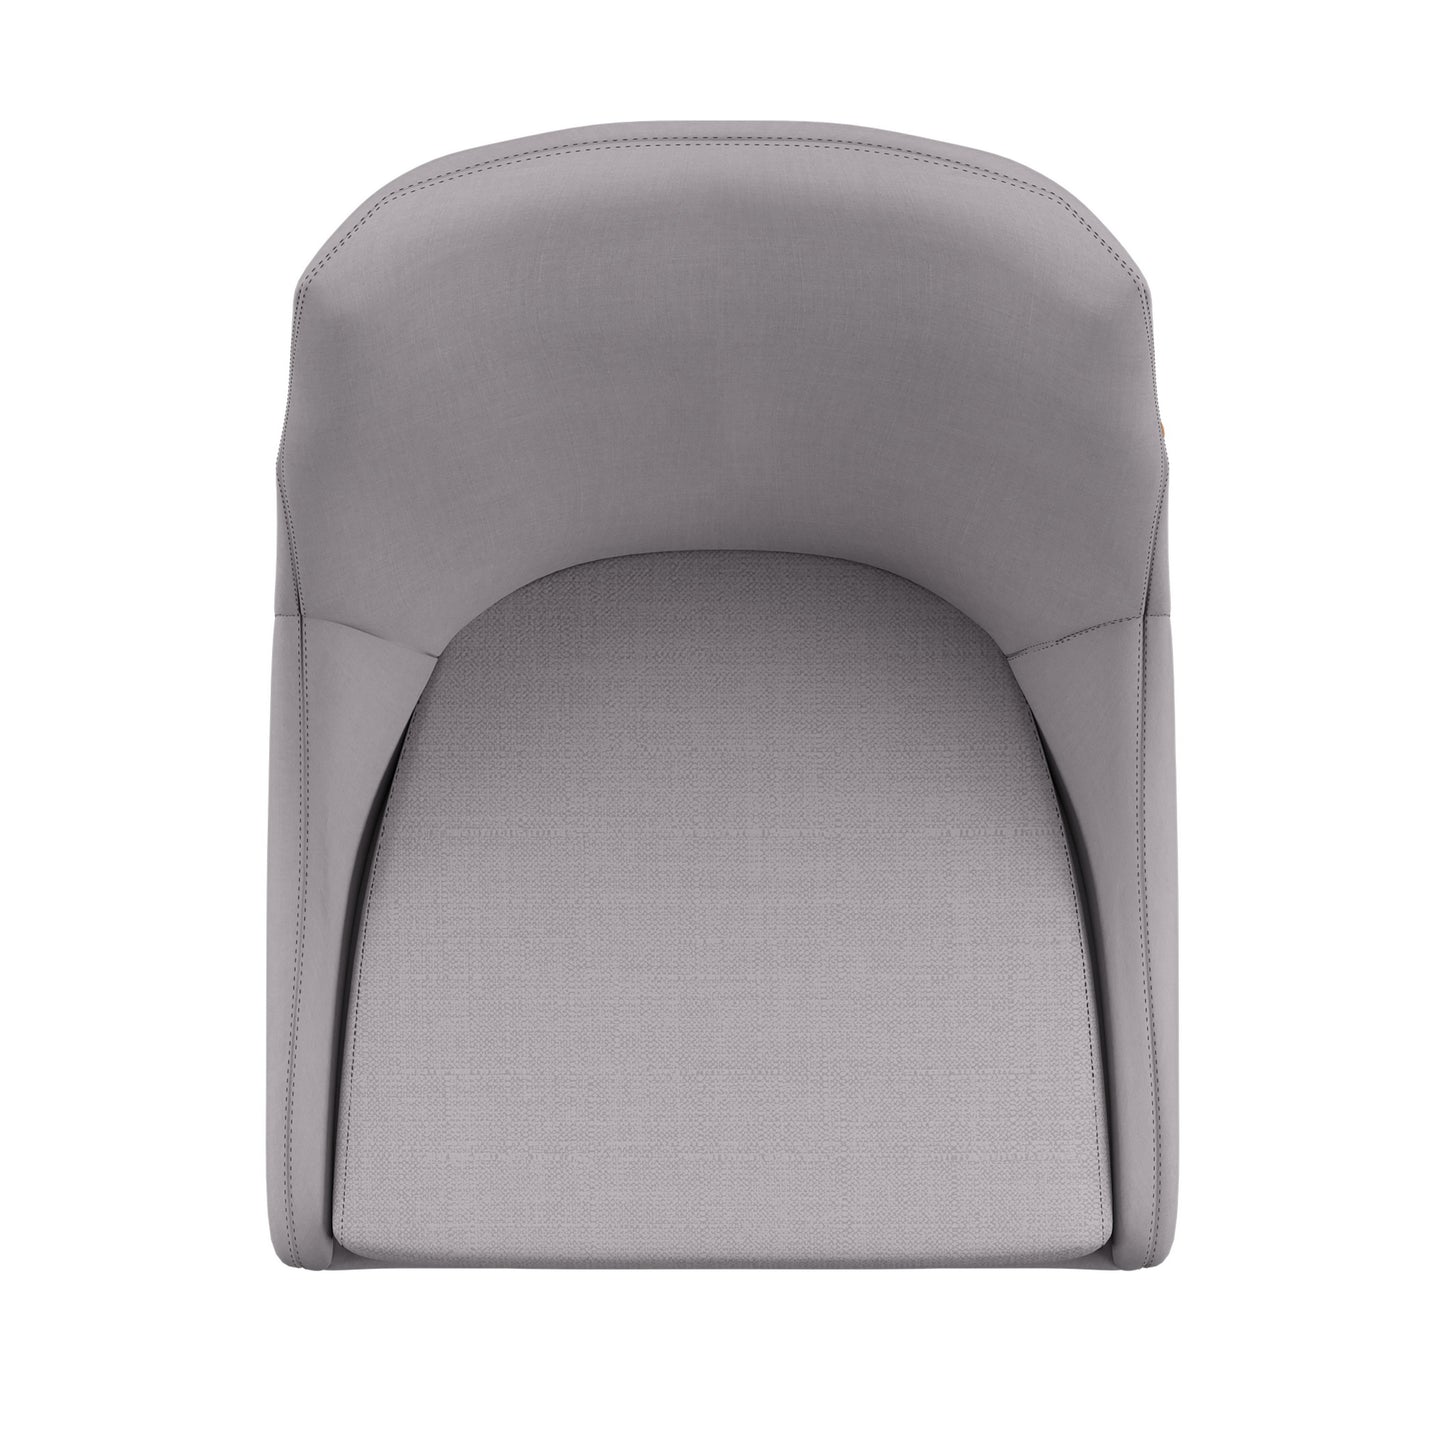 Oak Barrel Back Linen Upholstered Dining Chairs (Set of 2) - Grey Linen